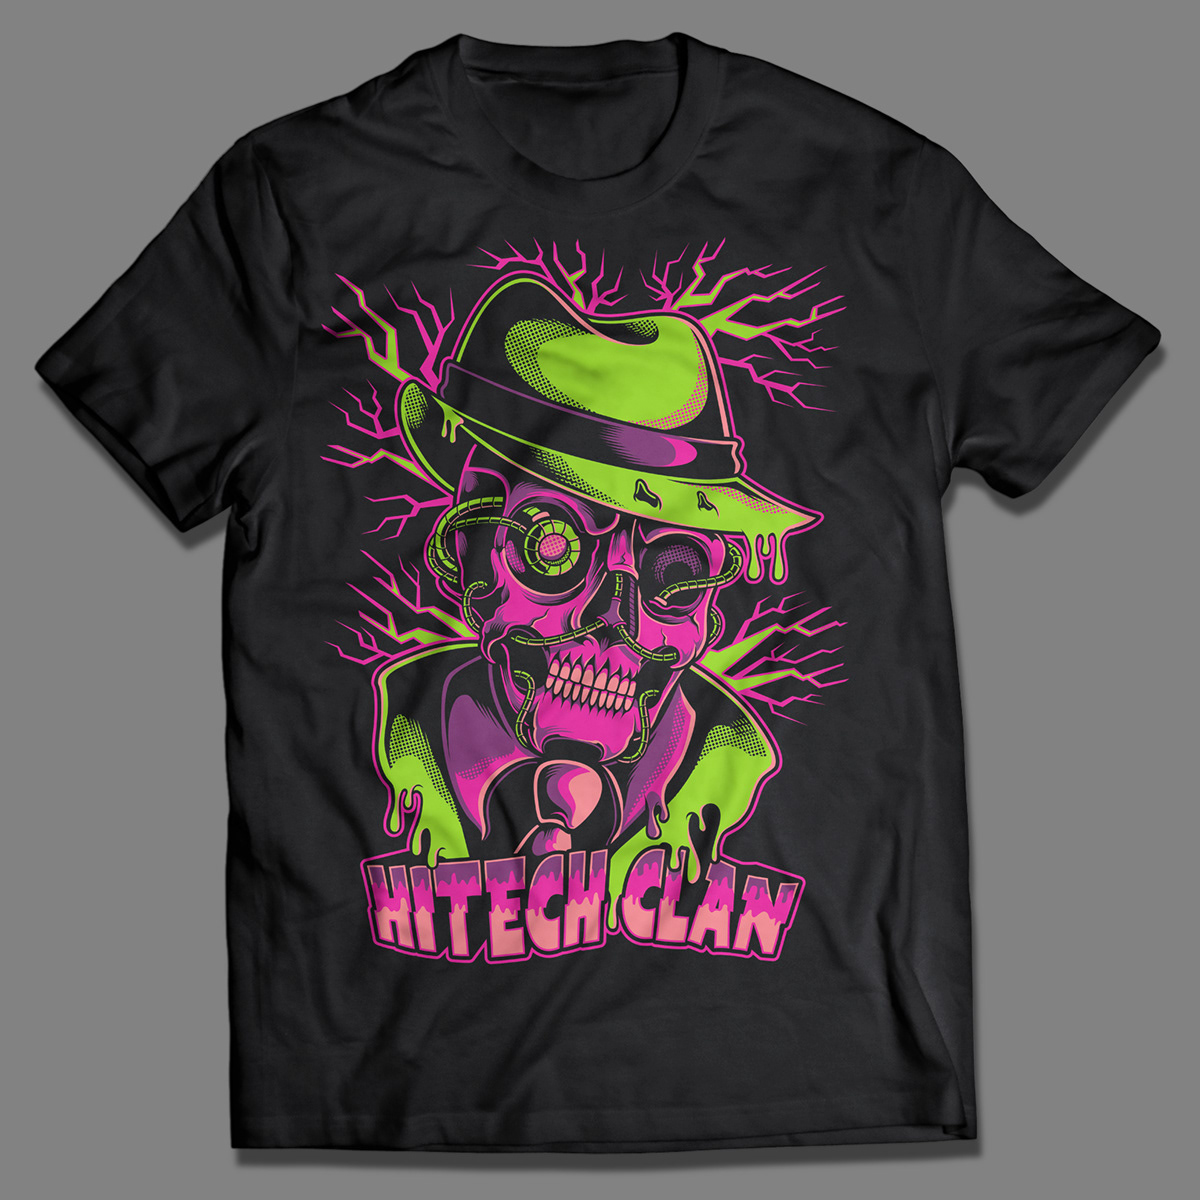 Hitech Clan Tshirt Graphic on Behance